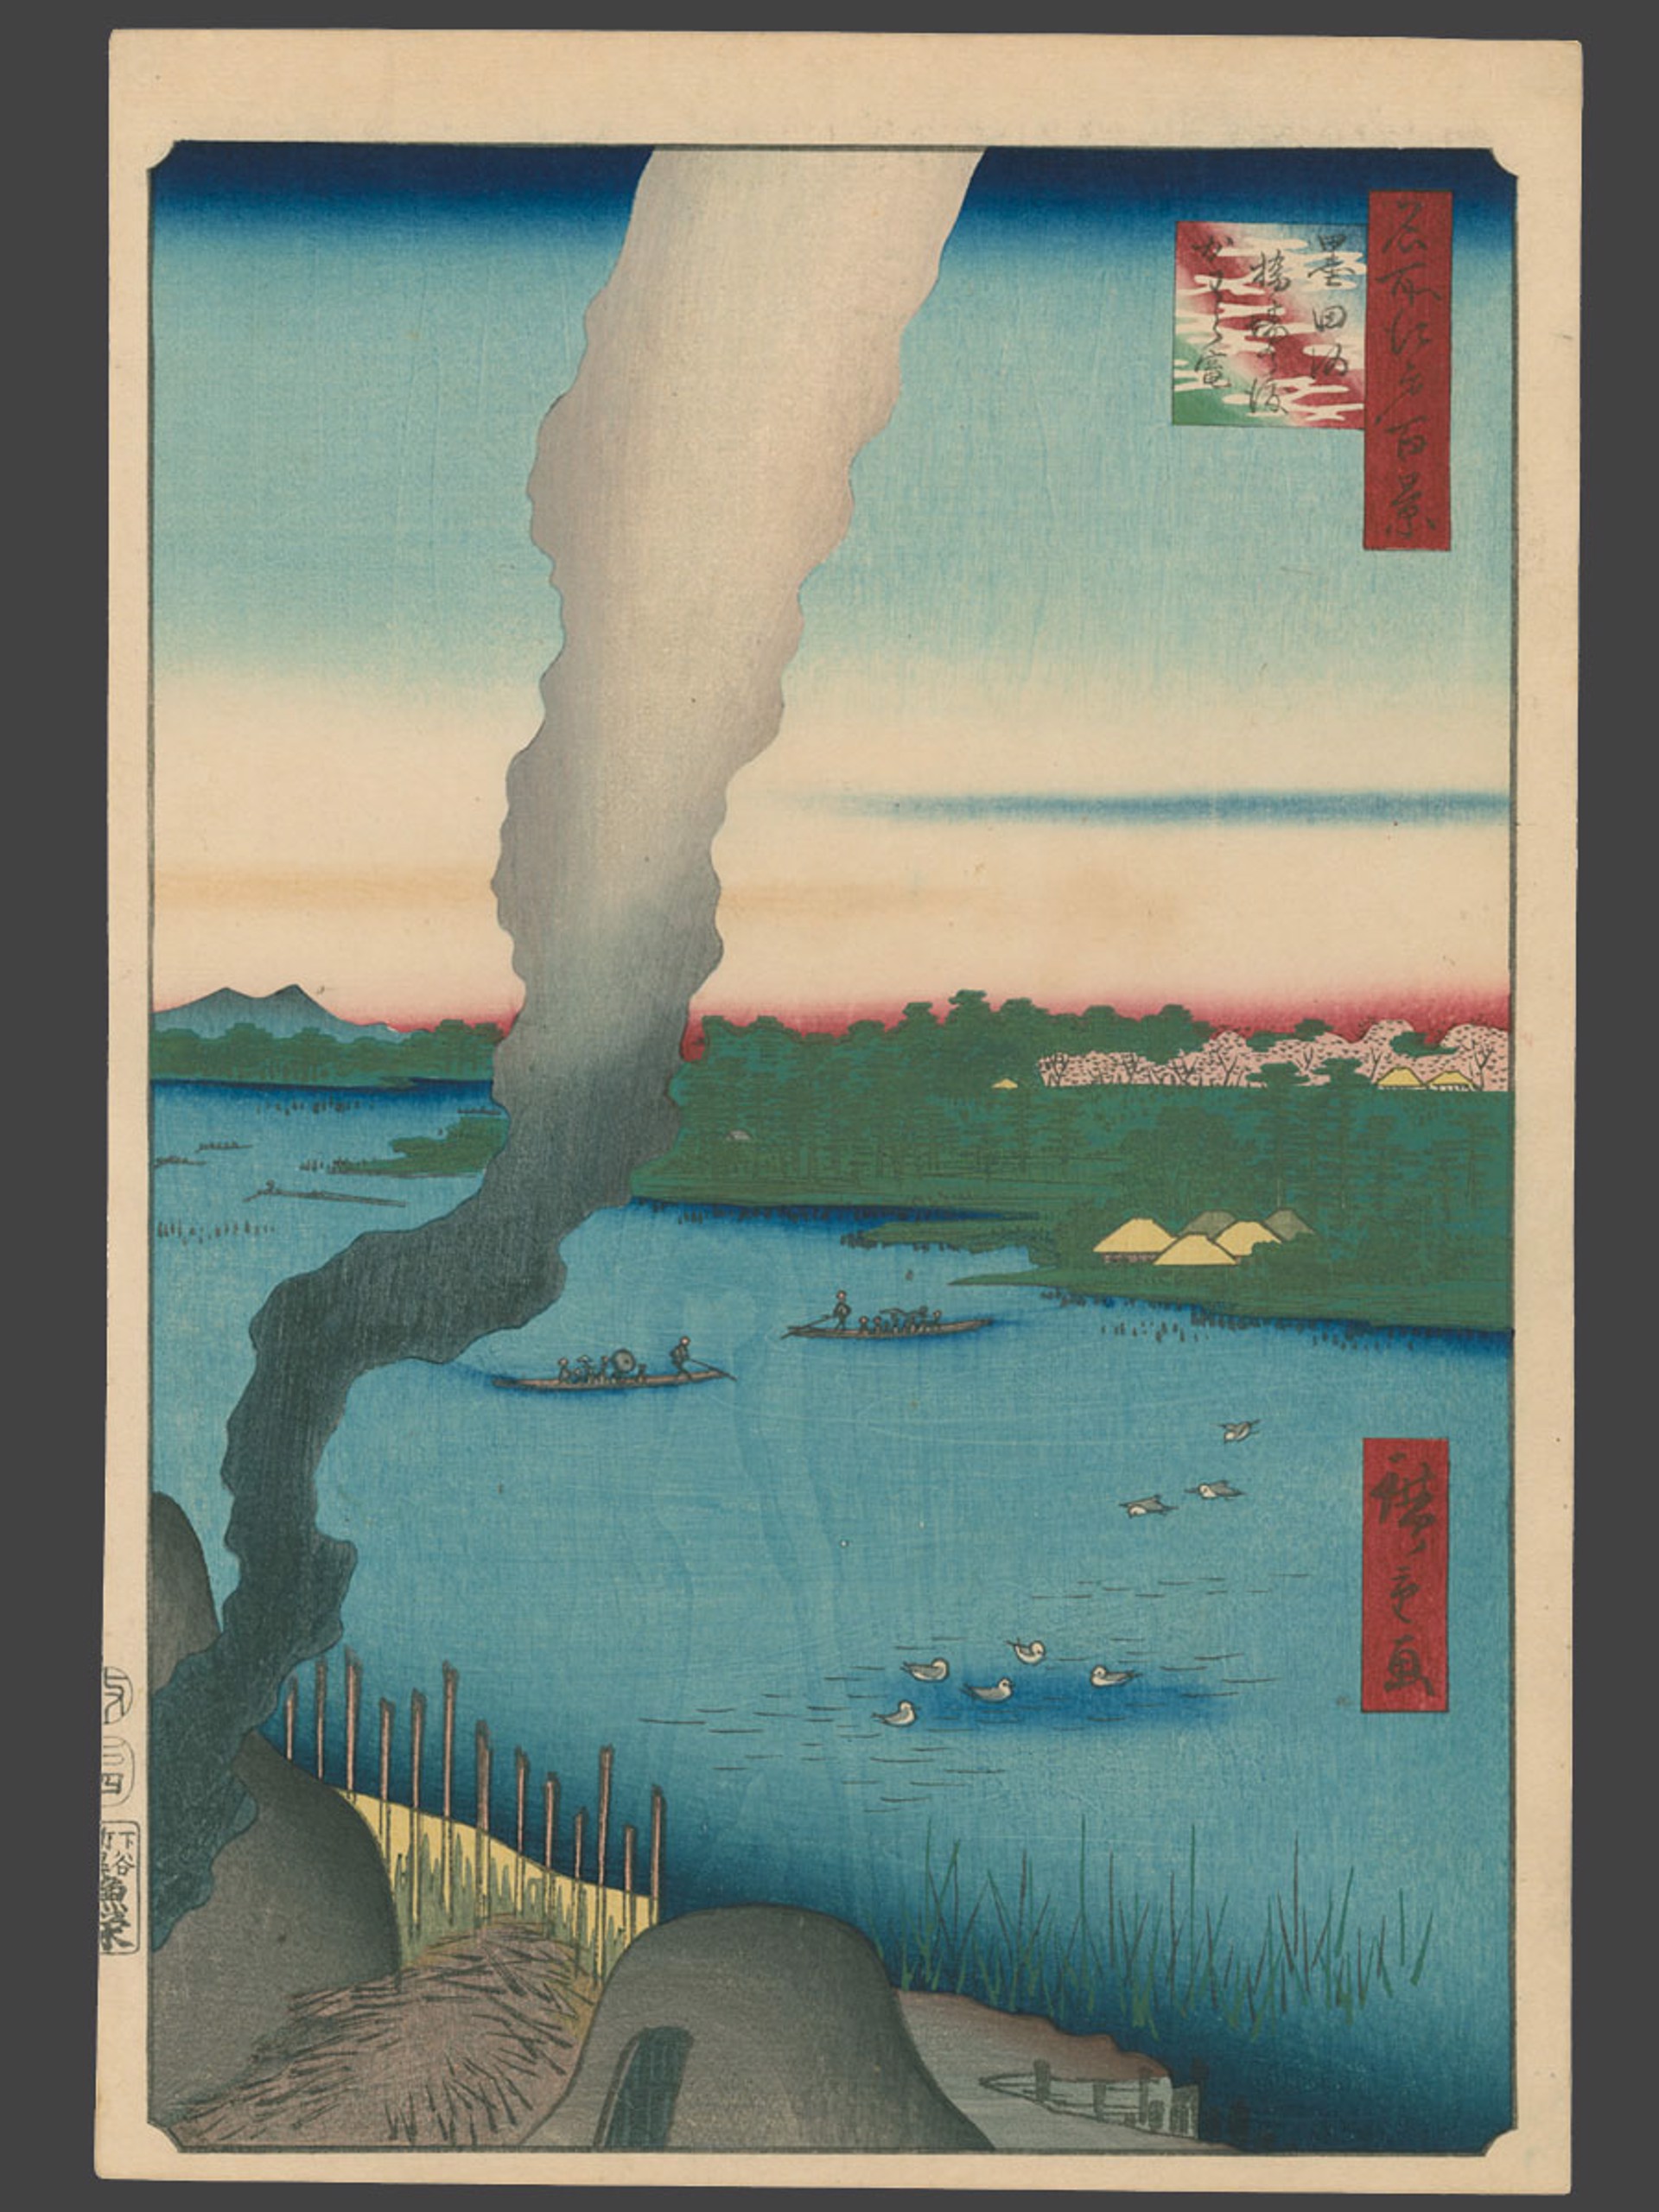 #37 - Hashiba Ferry and Tile Kilns on the Sumida River 100 Views of Edo by Hiroshige